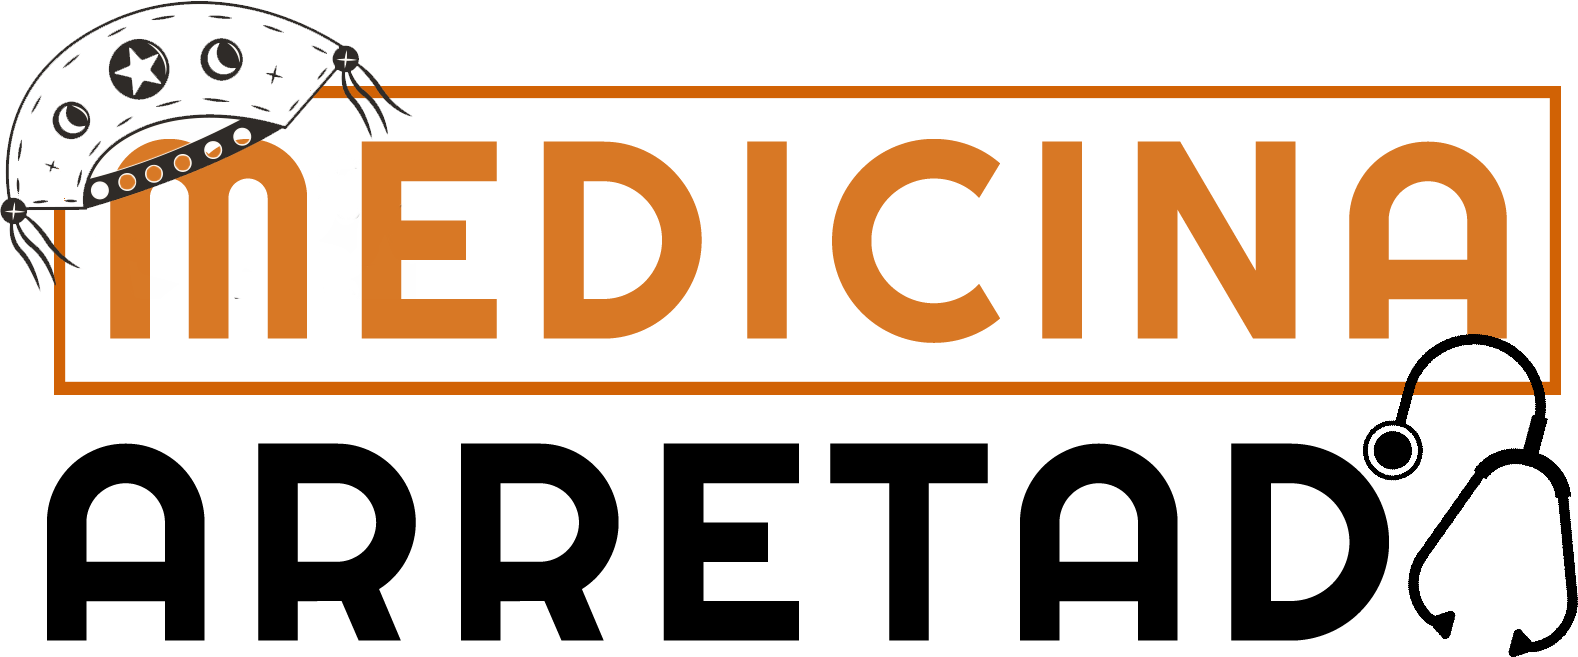 Logomarca do Medicina Arretada